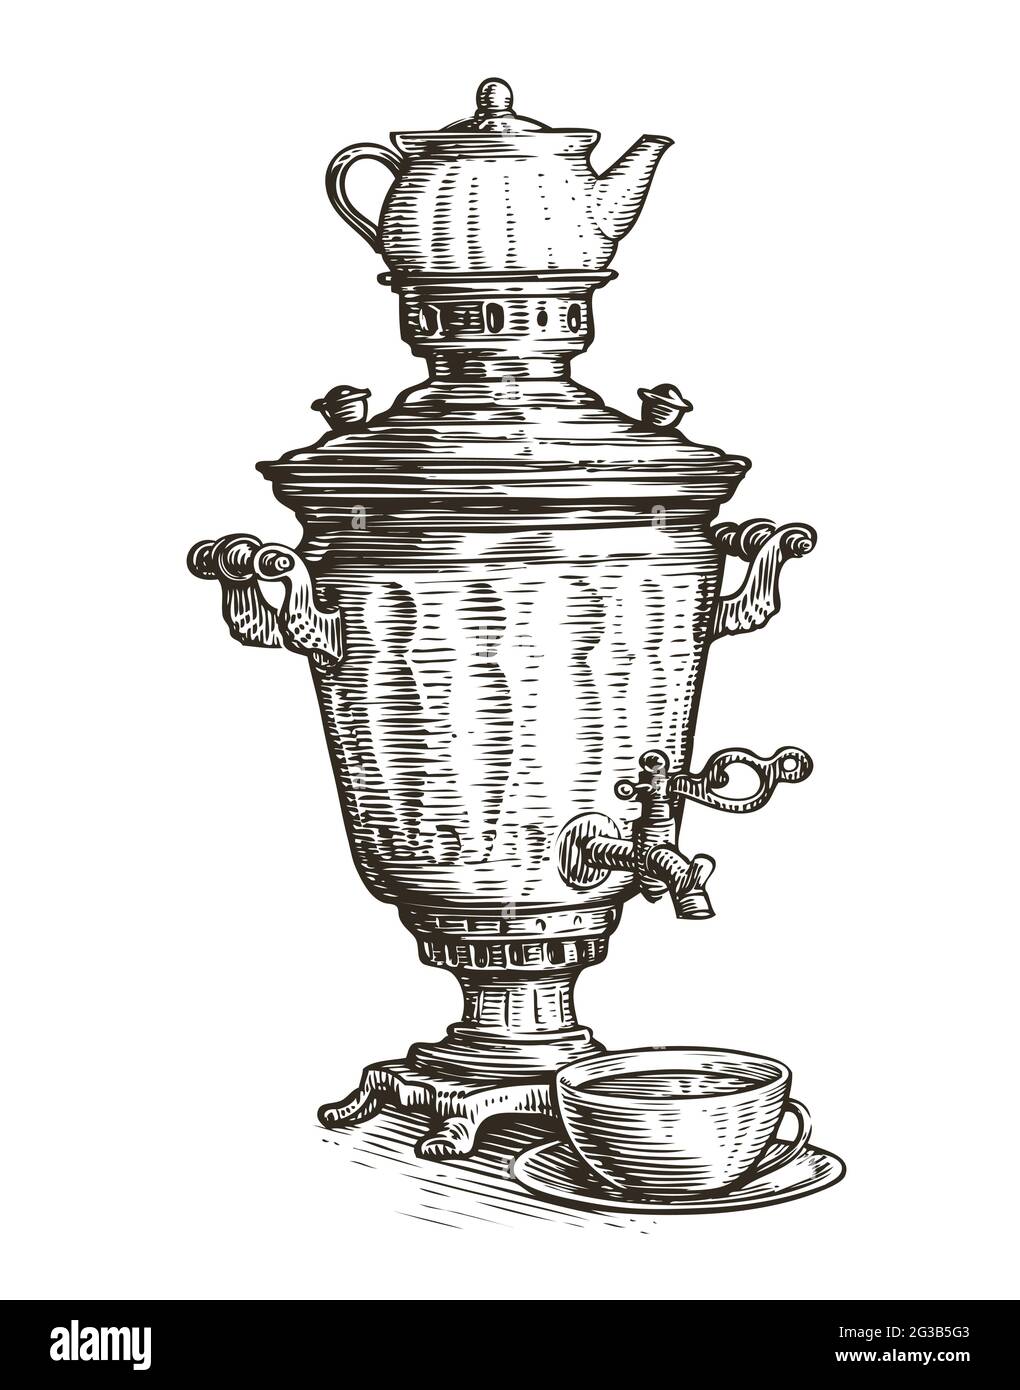 Samovare Skizze. Russische traditionelle altmodische Art des Teetrinkens. Vintage-Vektorgrafik Stock Vektor